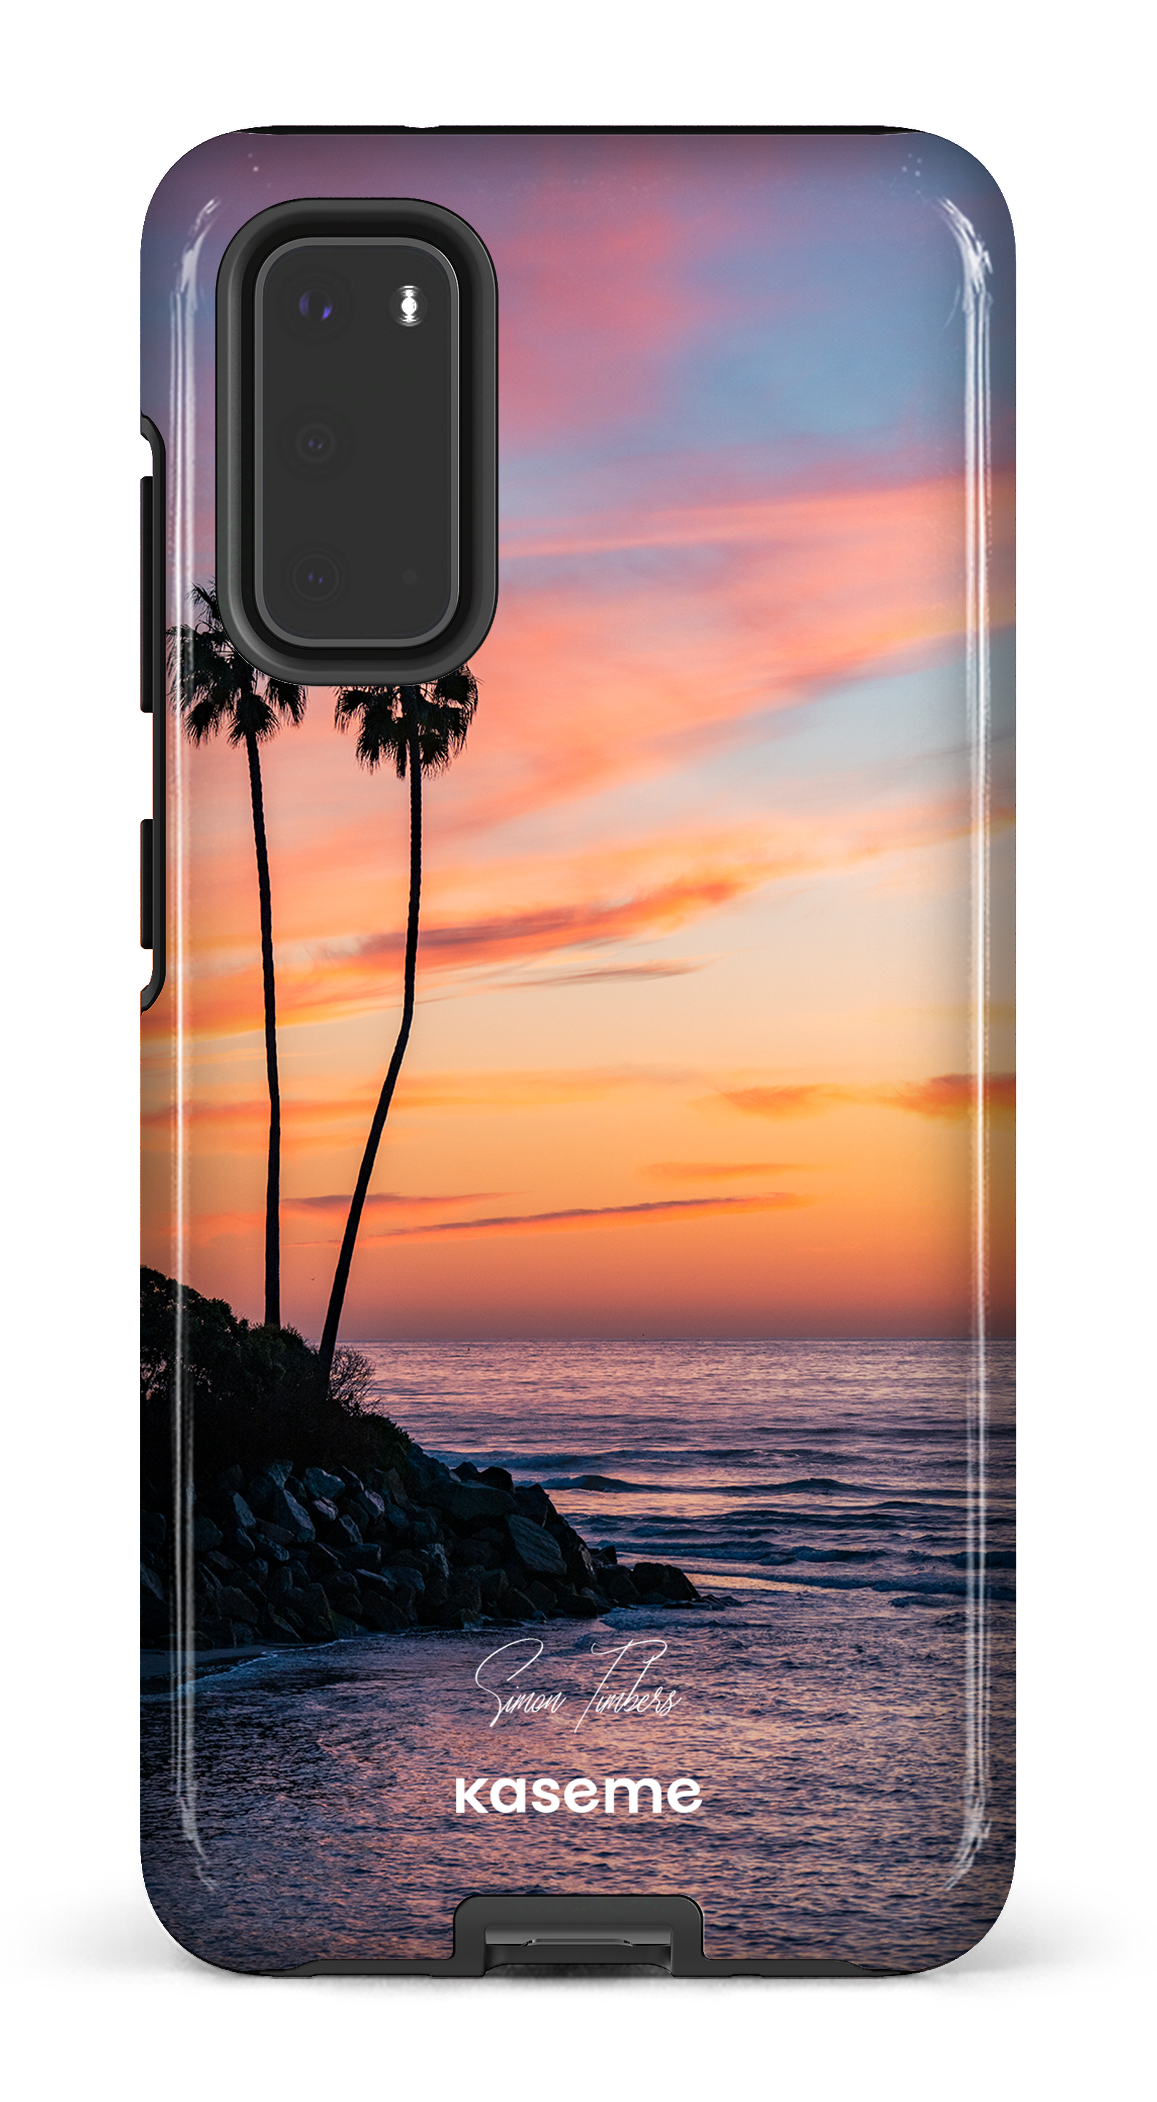 Sunset Palms by Simon Timbers - Galaxy S20